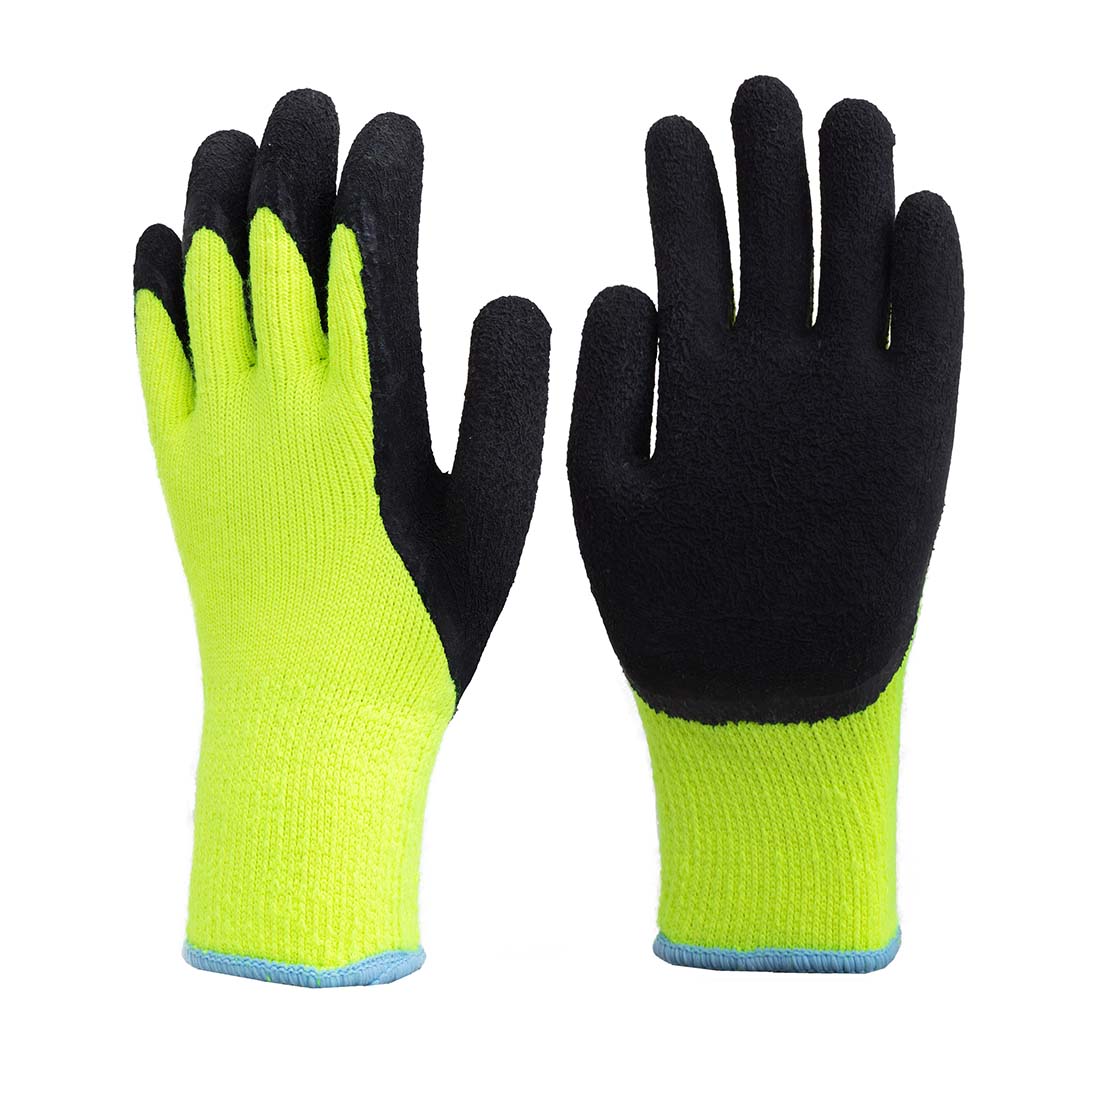 7G latex gloves | 7G coated gloves | Foam coated gloves